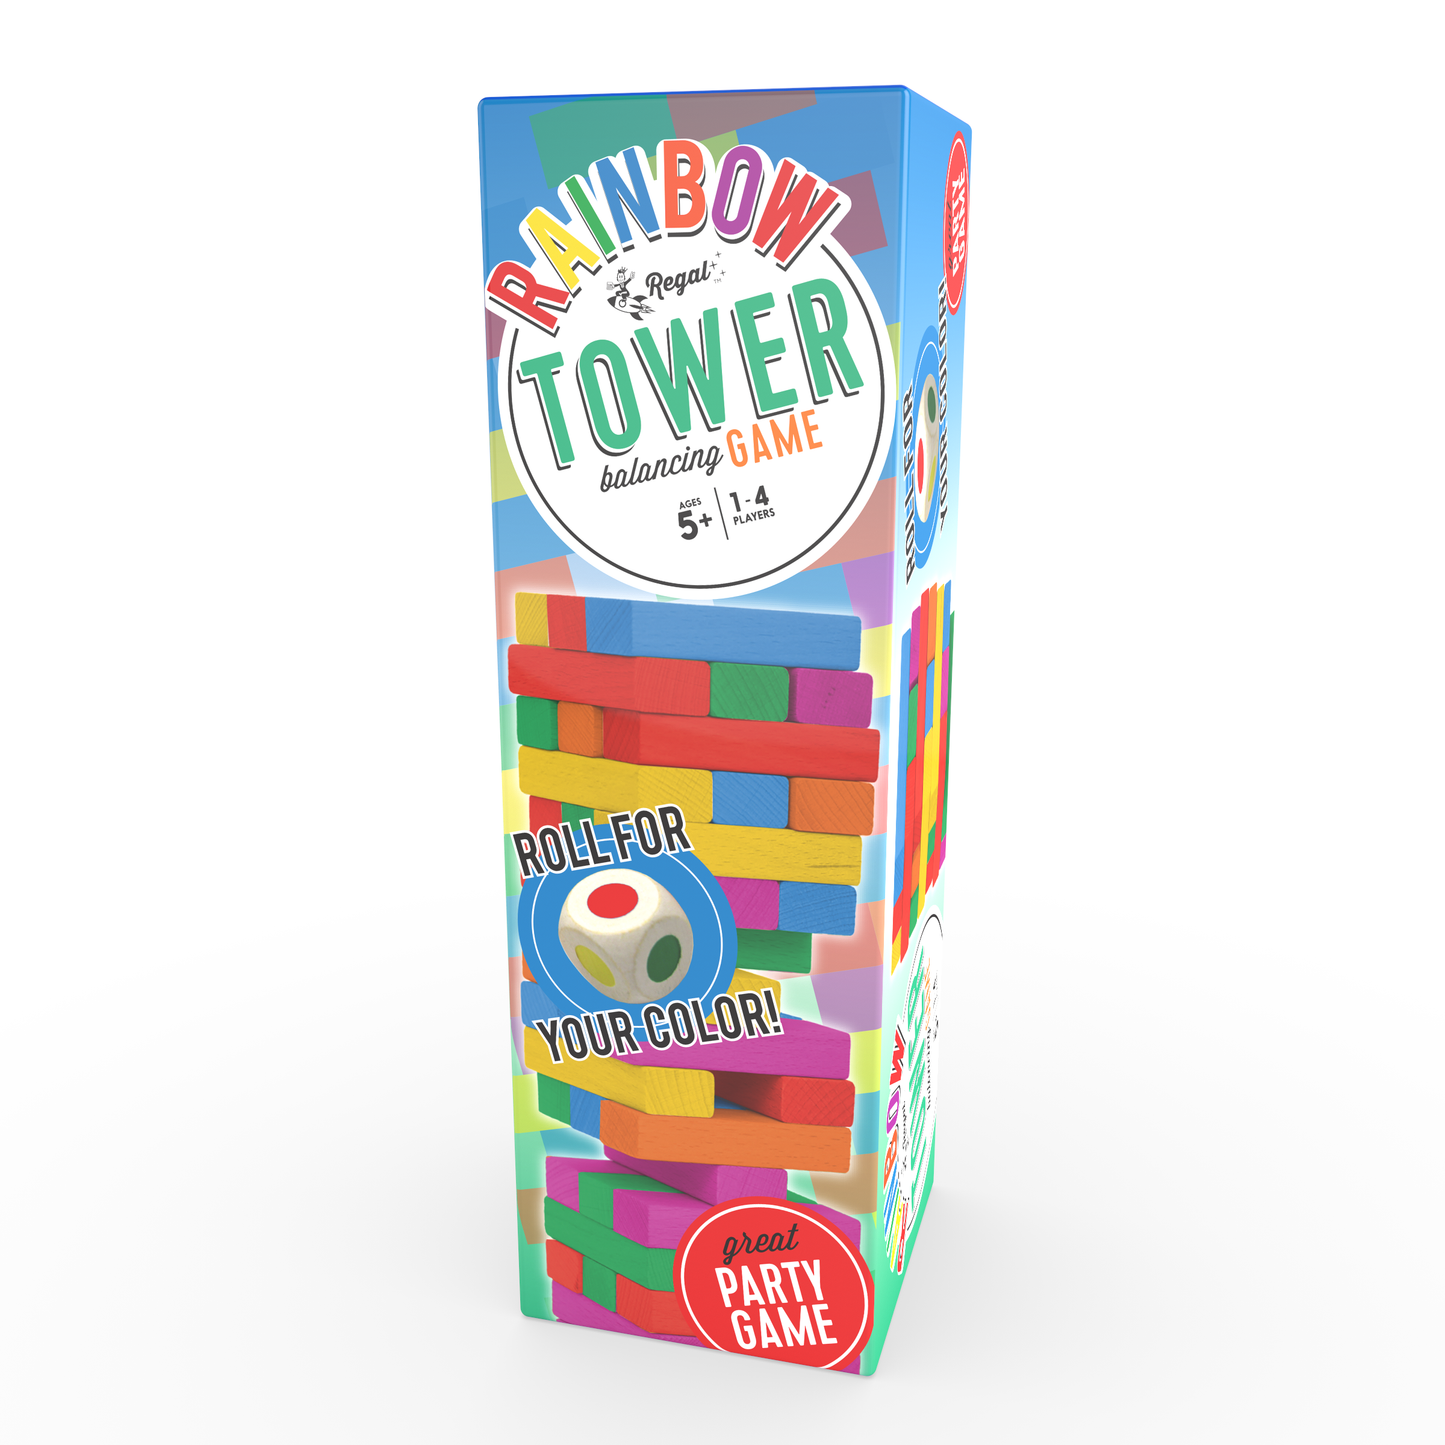 Regal Games - Rainbow Tower